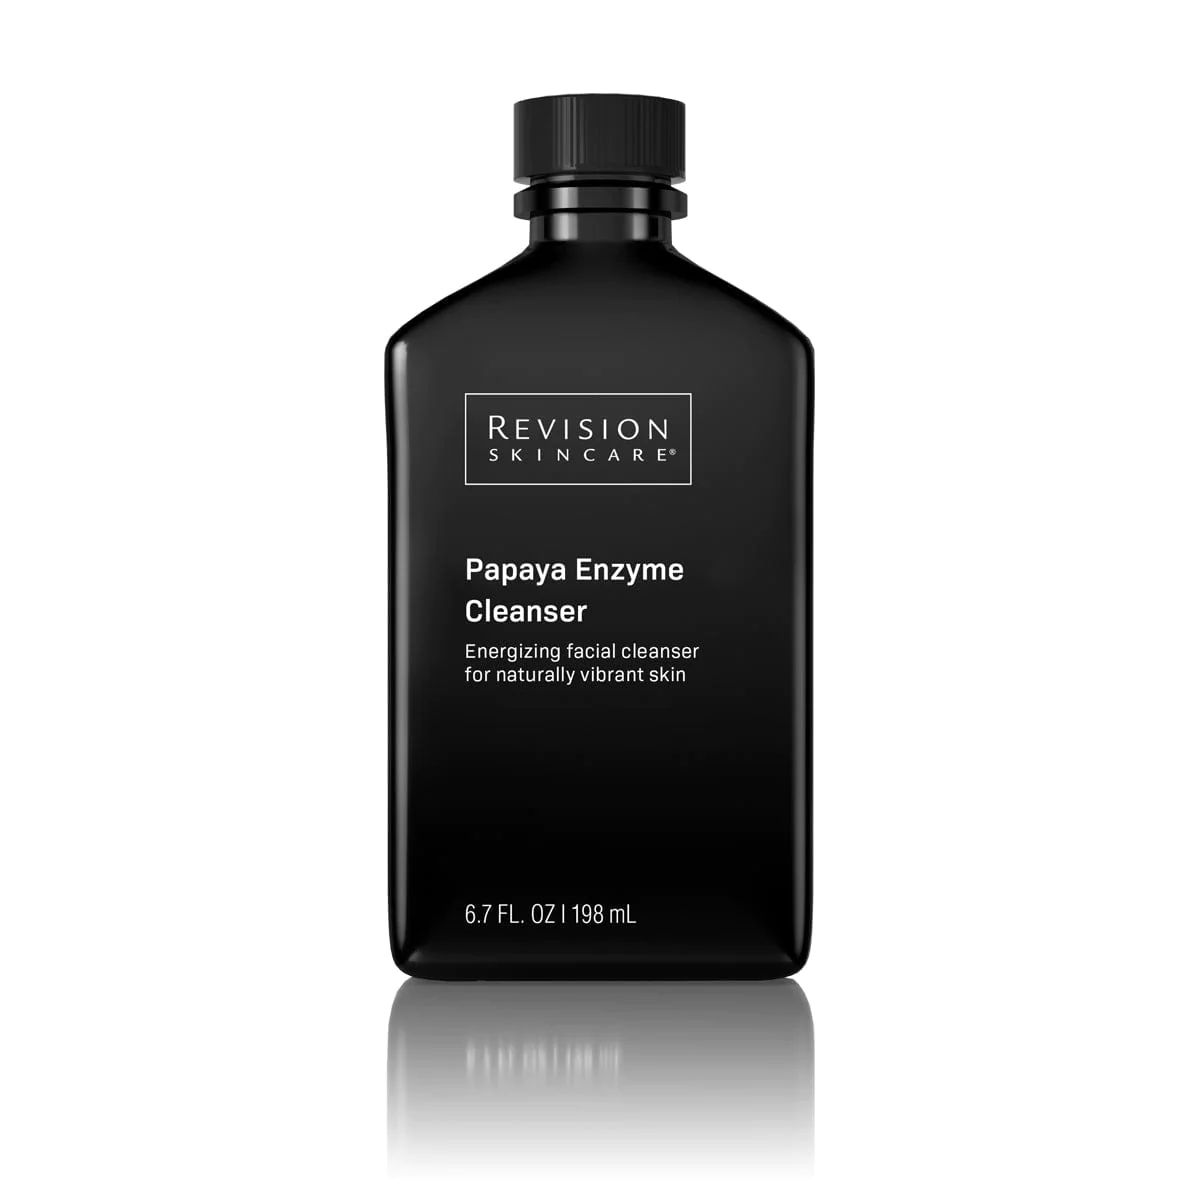 Papaya Enzyme Cleanser 6.7 fl oz | Revision skincare